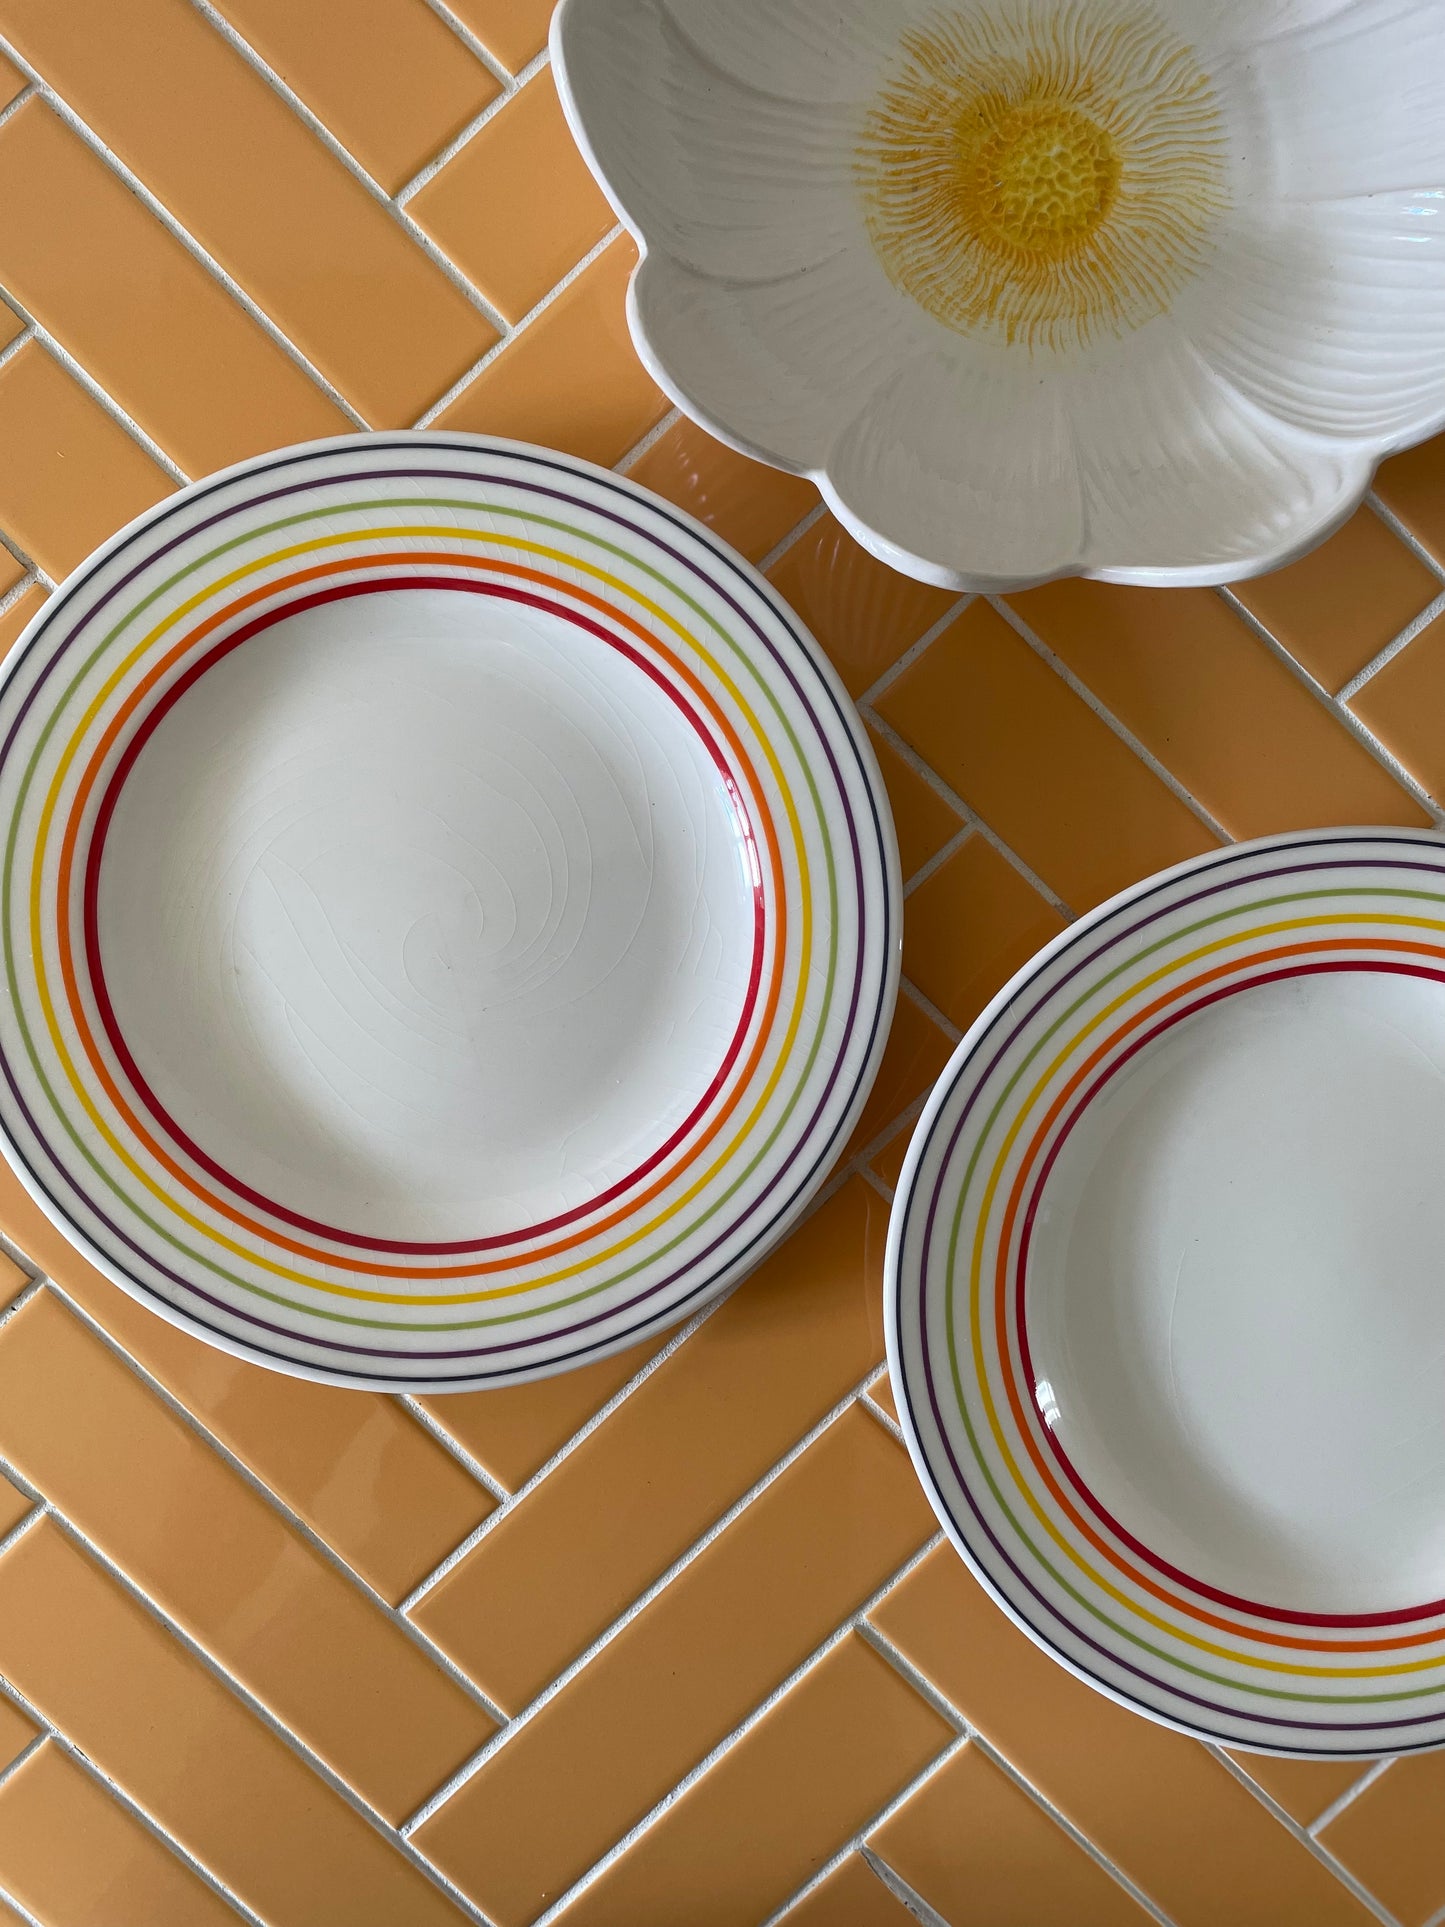 Plates with rainbow edge